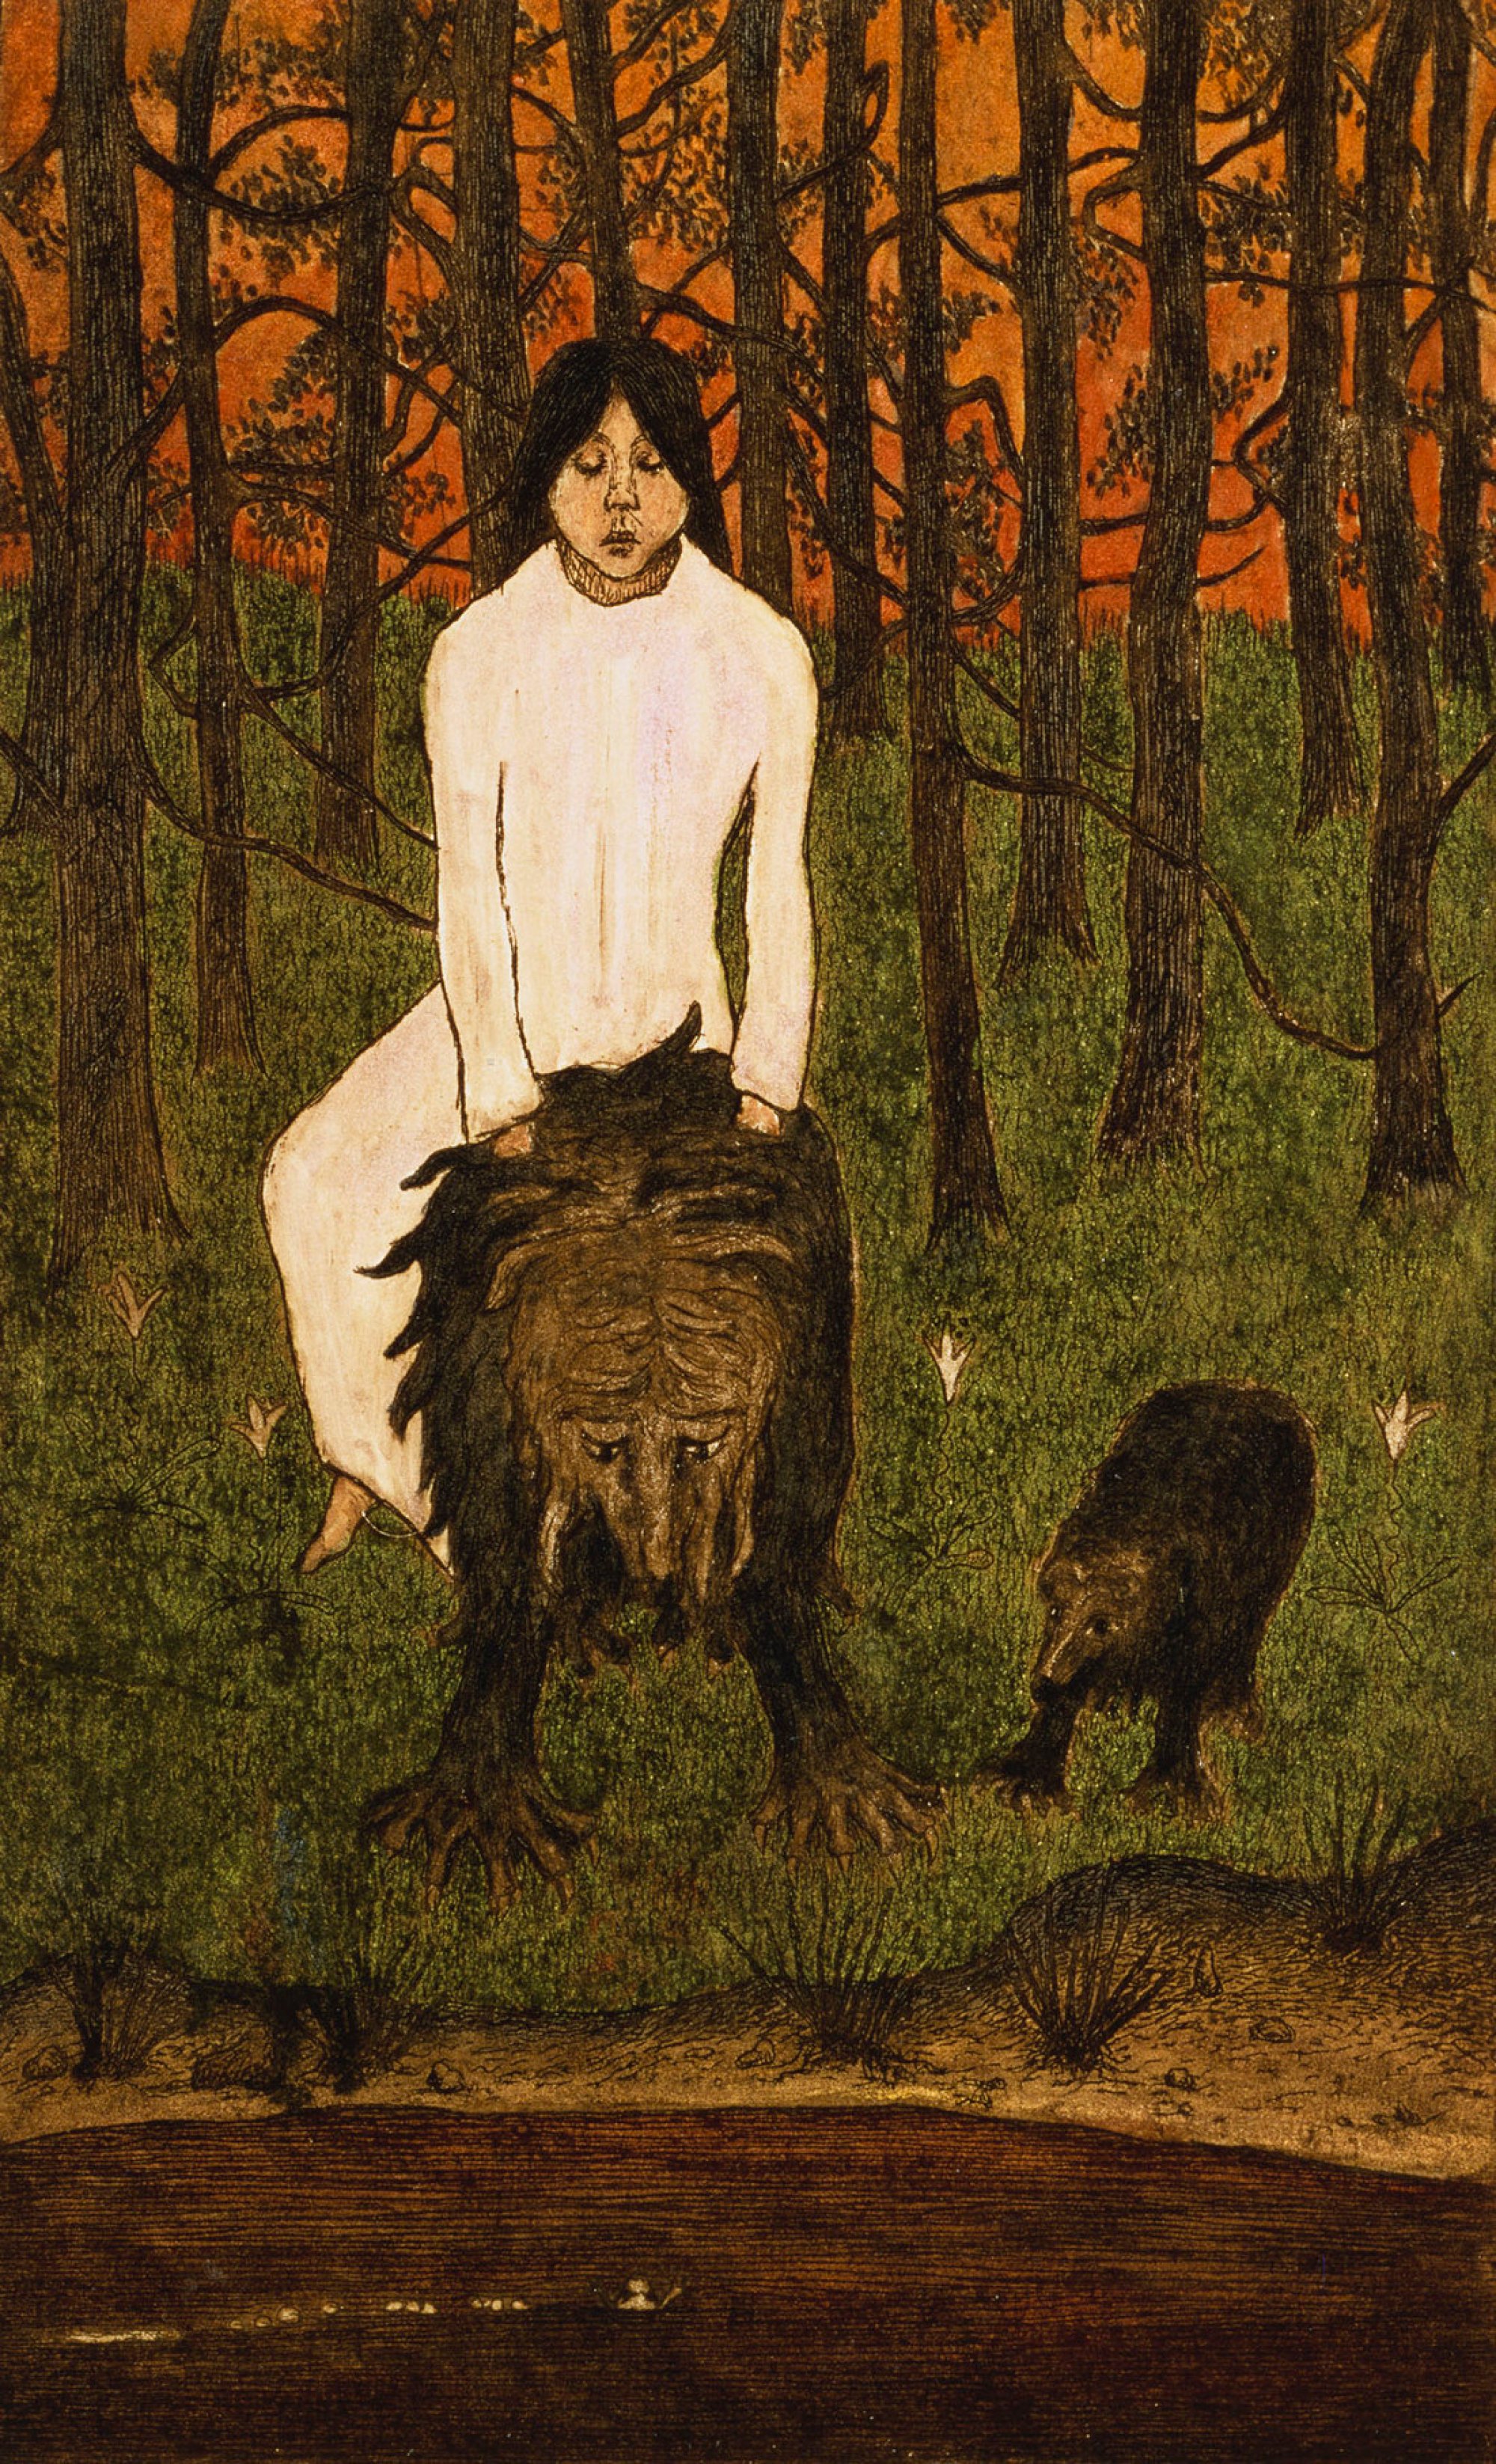 Fairy Tale by Hugo Simberg - 1898 - 21 x 13 cm Finnish National Gallery